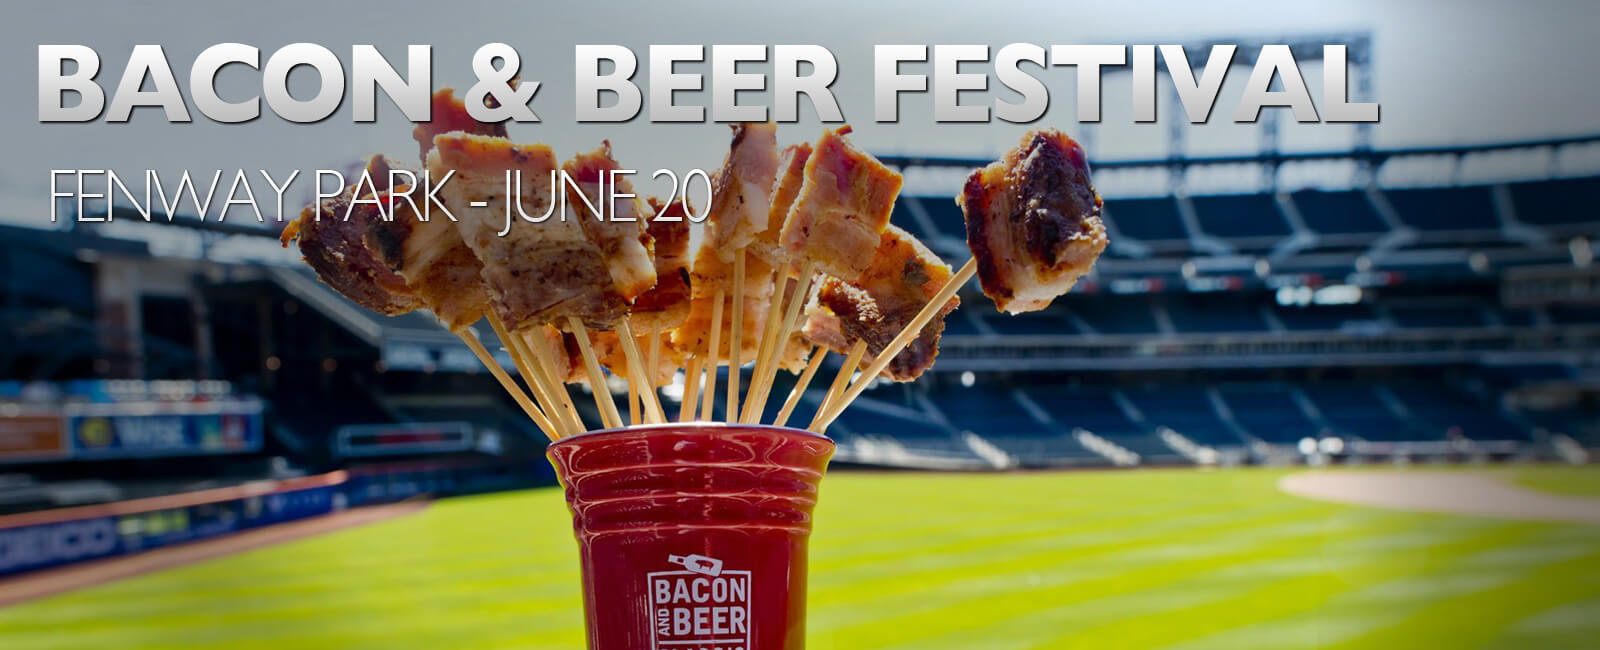 Bacon & Beer Festival Fenway Park June 20 WeekendPick